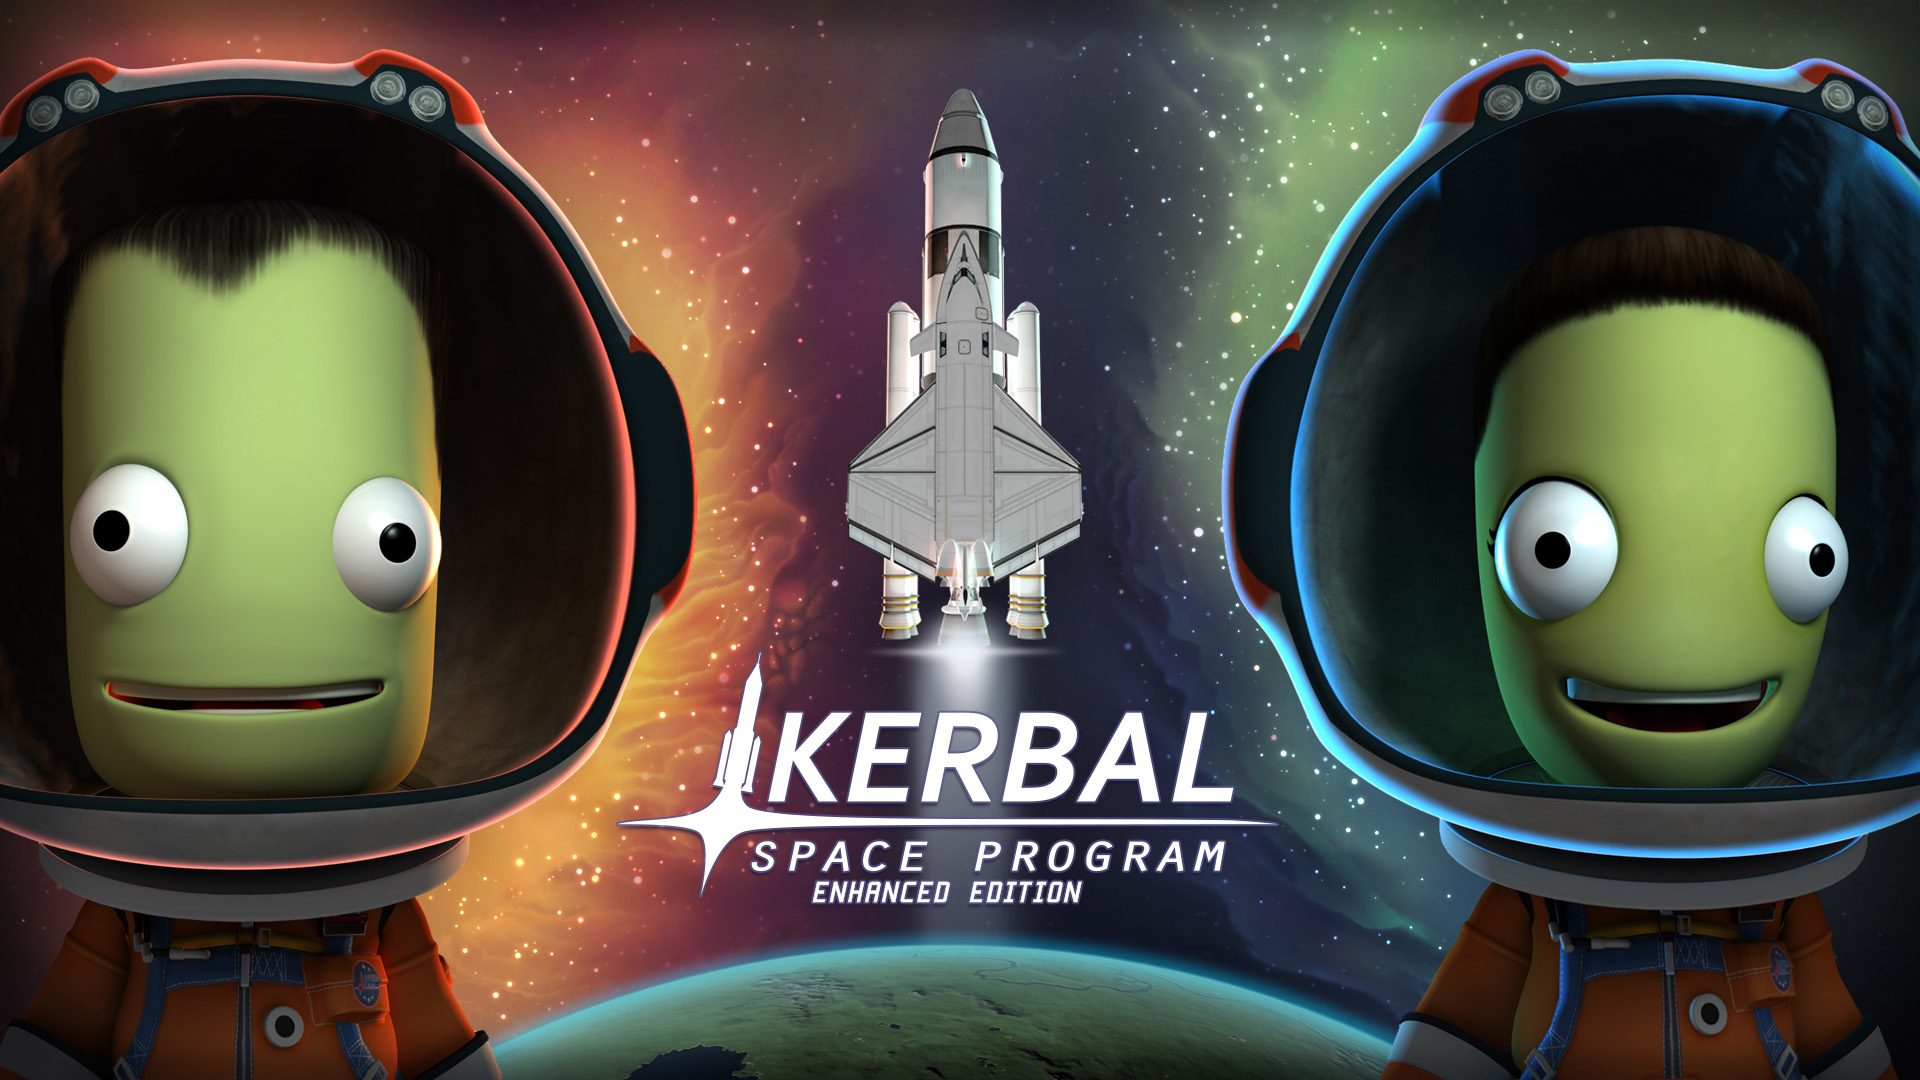 kerbal space program english dictionary file